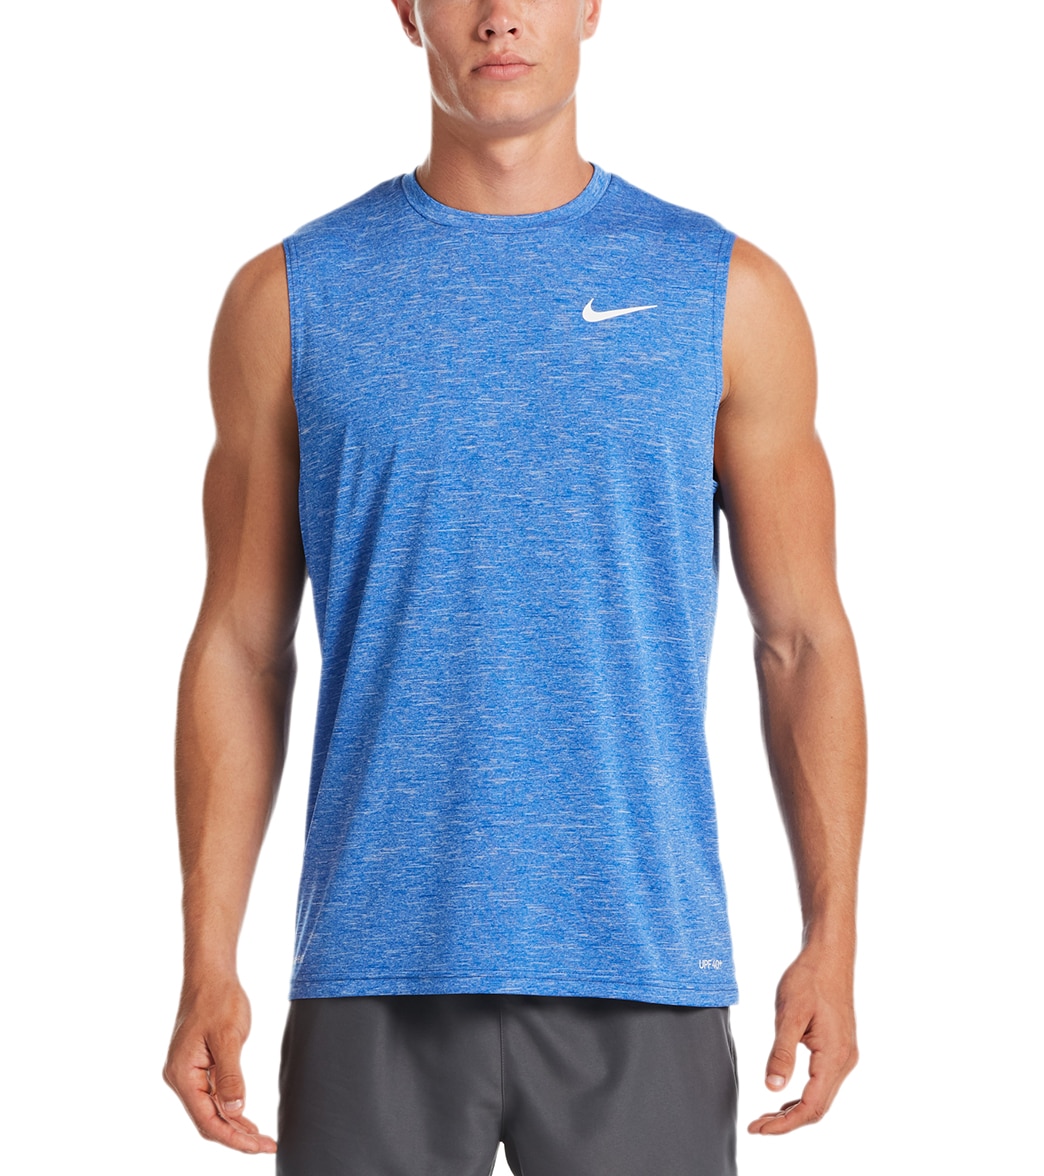 Nike Men's Heather Sleeveless Hydroguard Shirt - Laser Blue Large Polyester - Swimoutlet.com